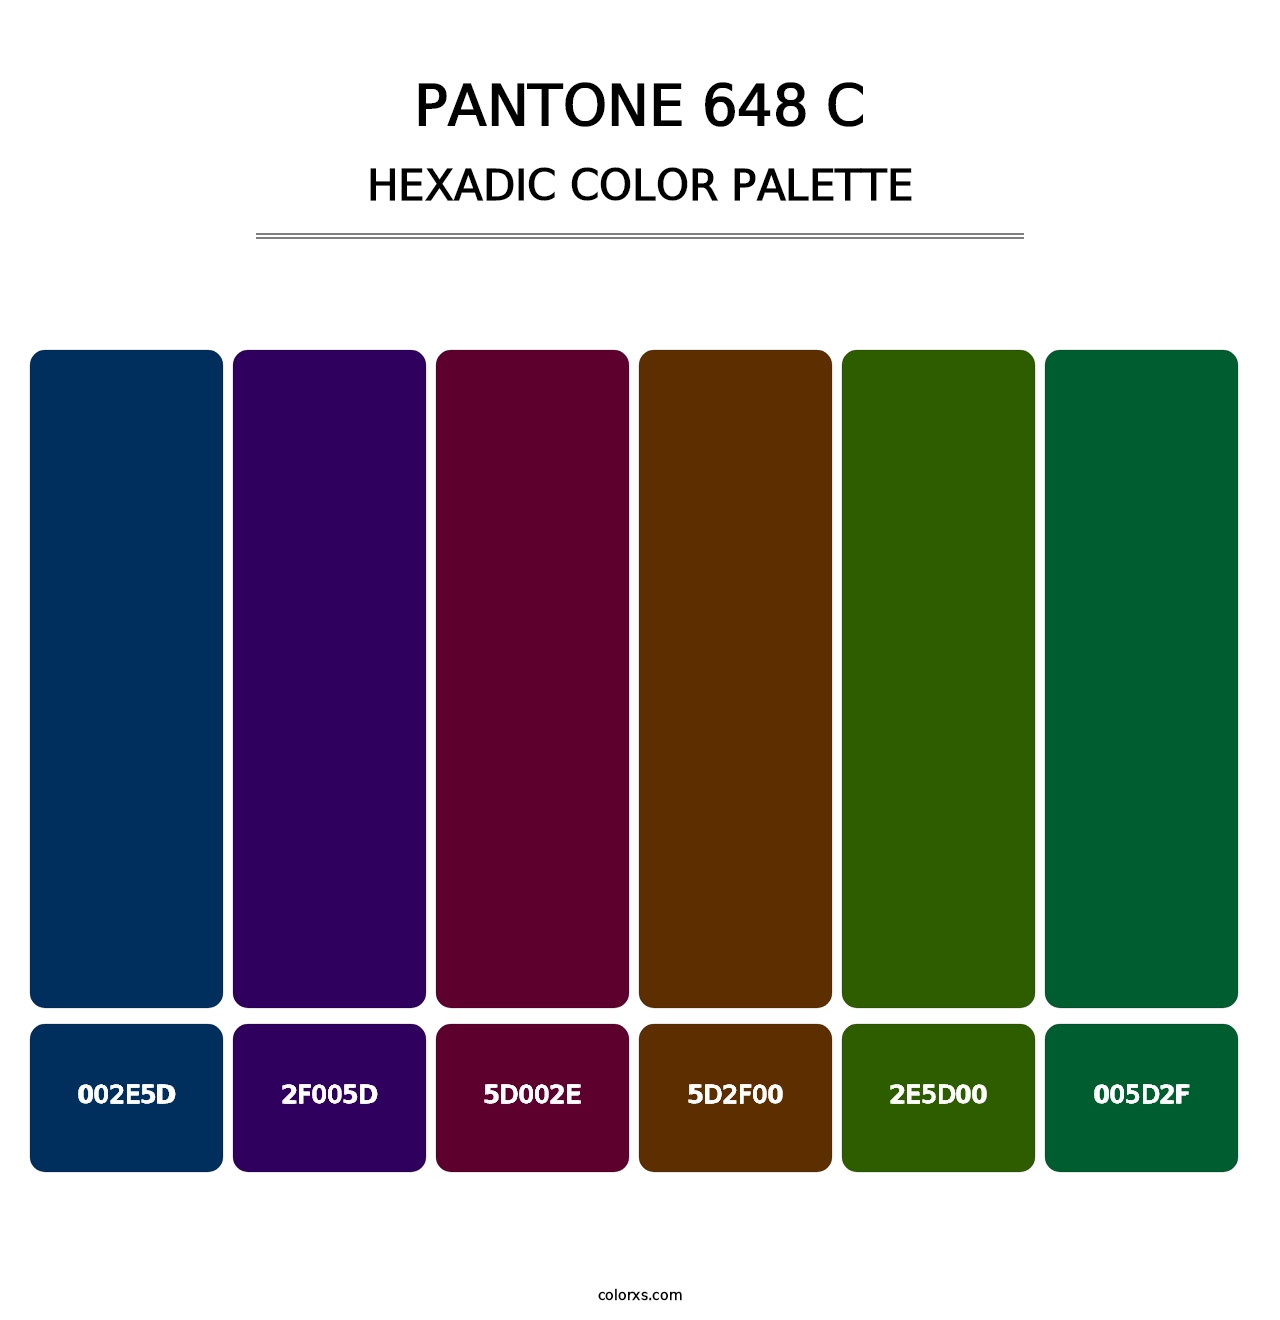 PANTONE 648 C - Hexadic Color Palette